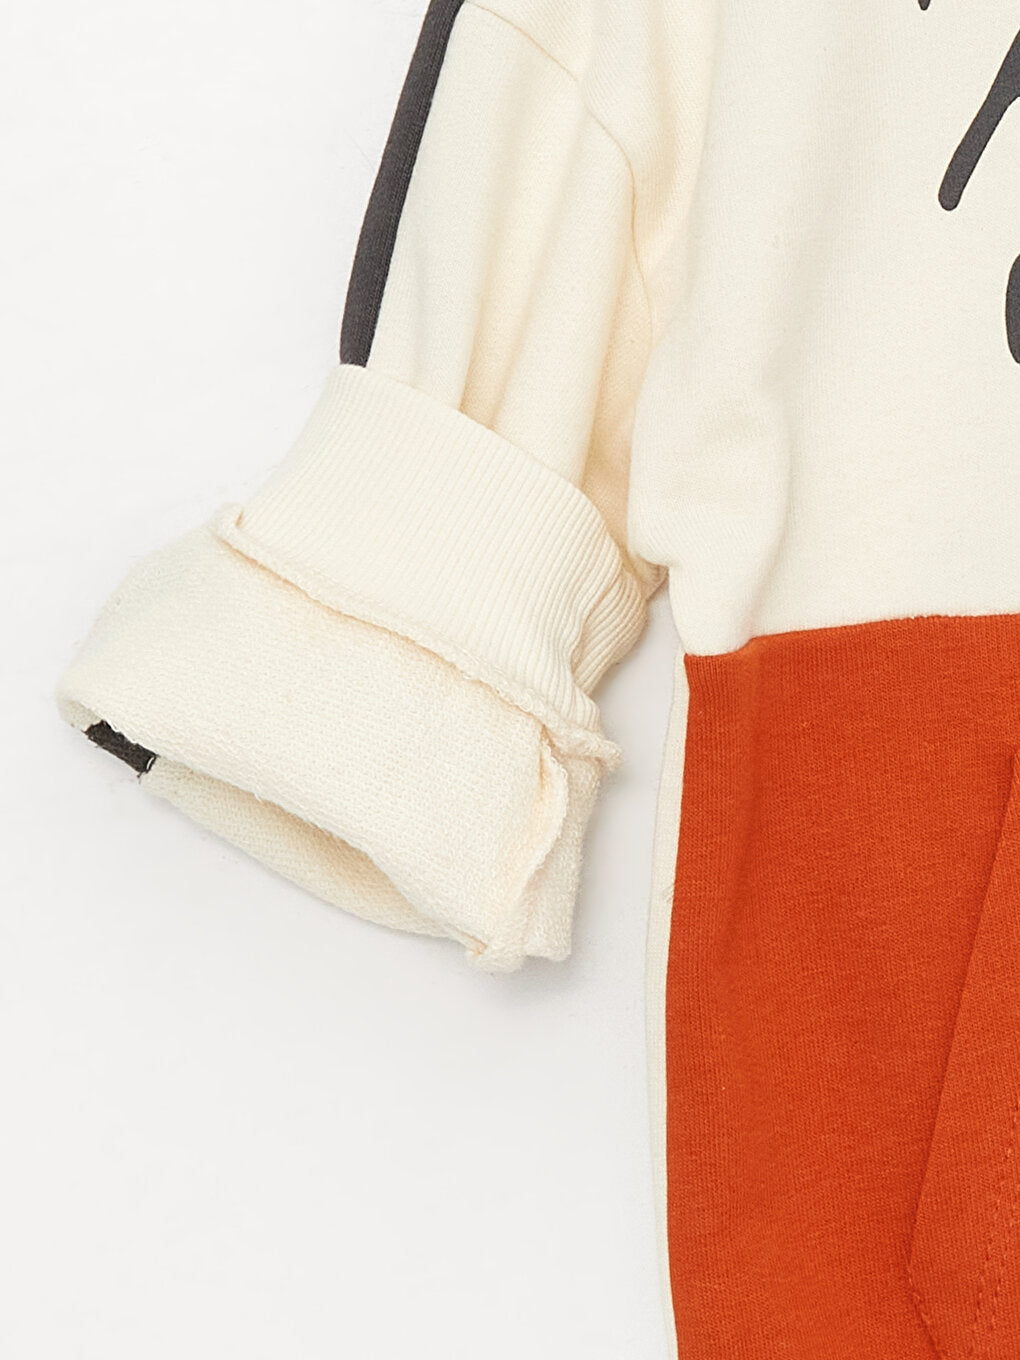 Crew Neck Printed Baby Boy Sweatshirt And Trousers 2-Piece Set